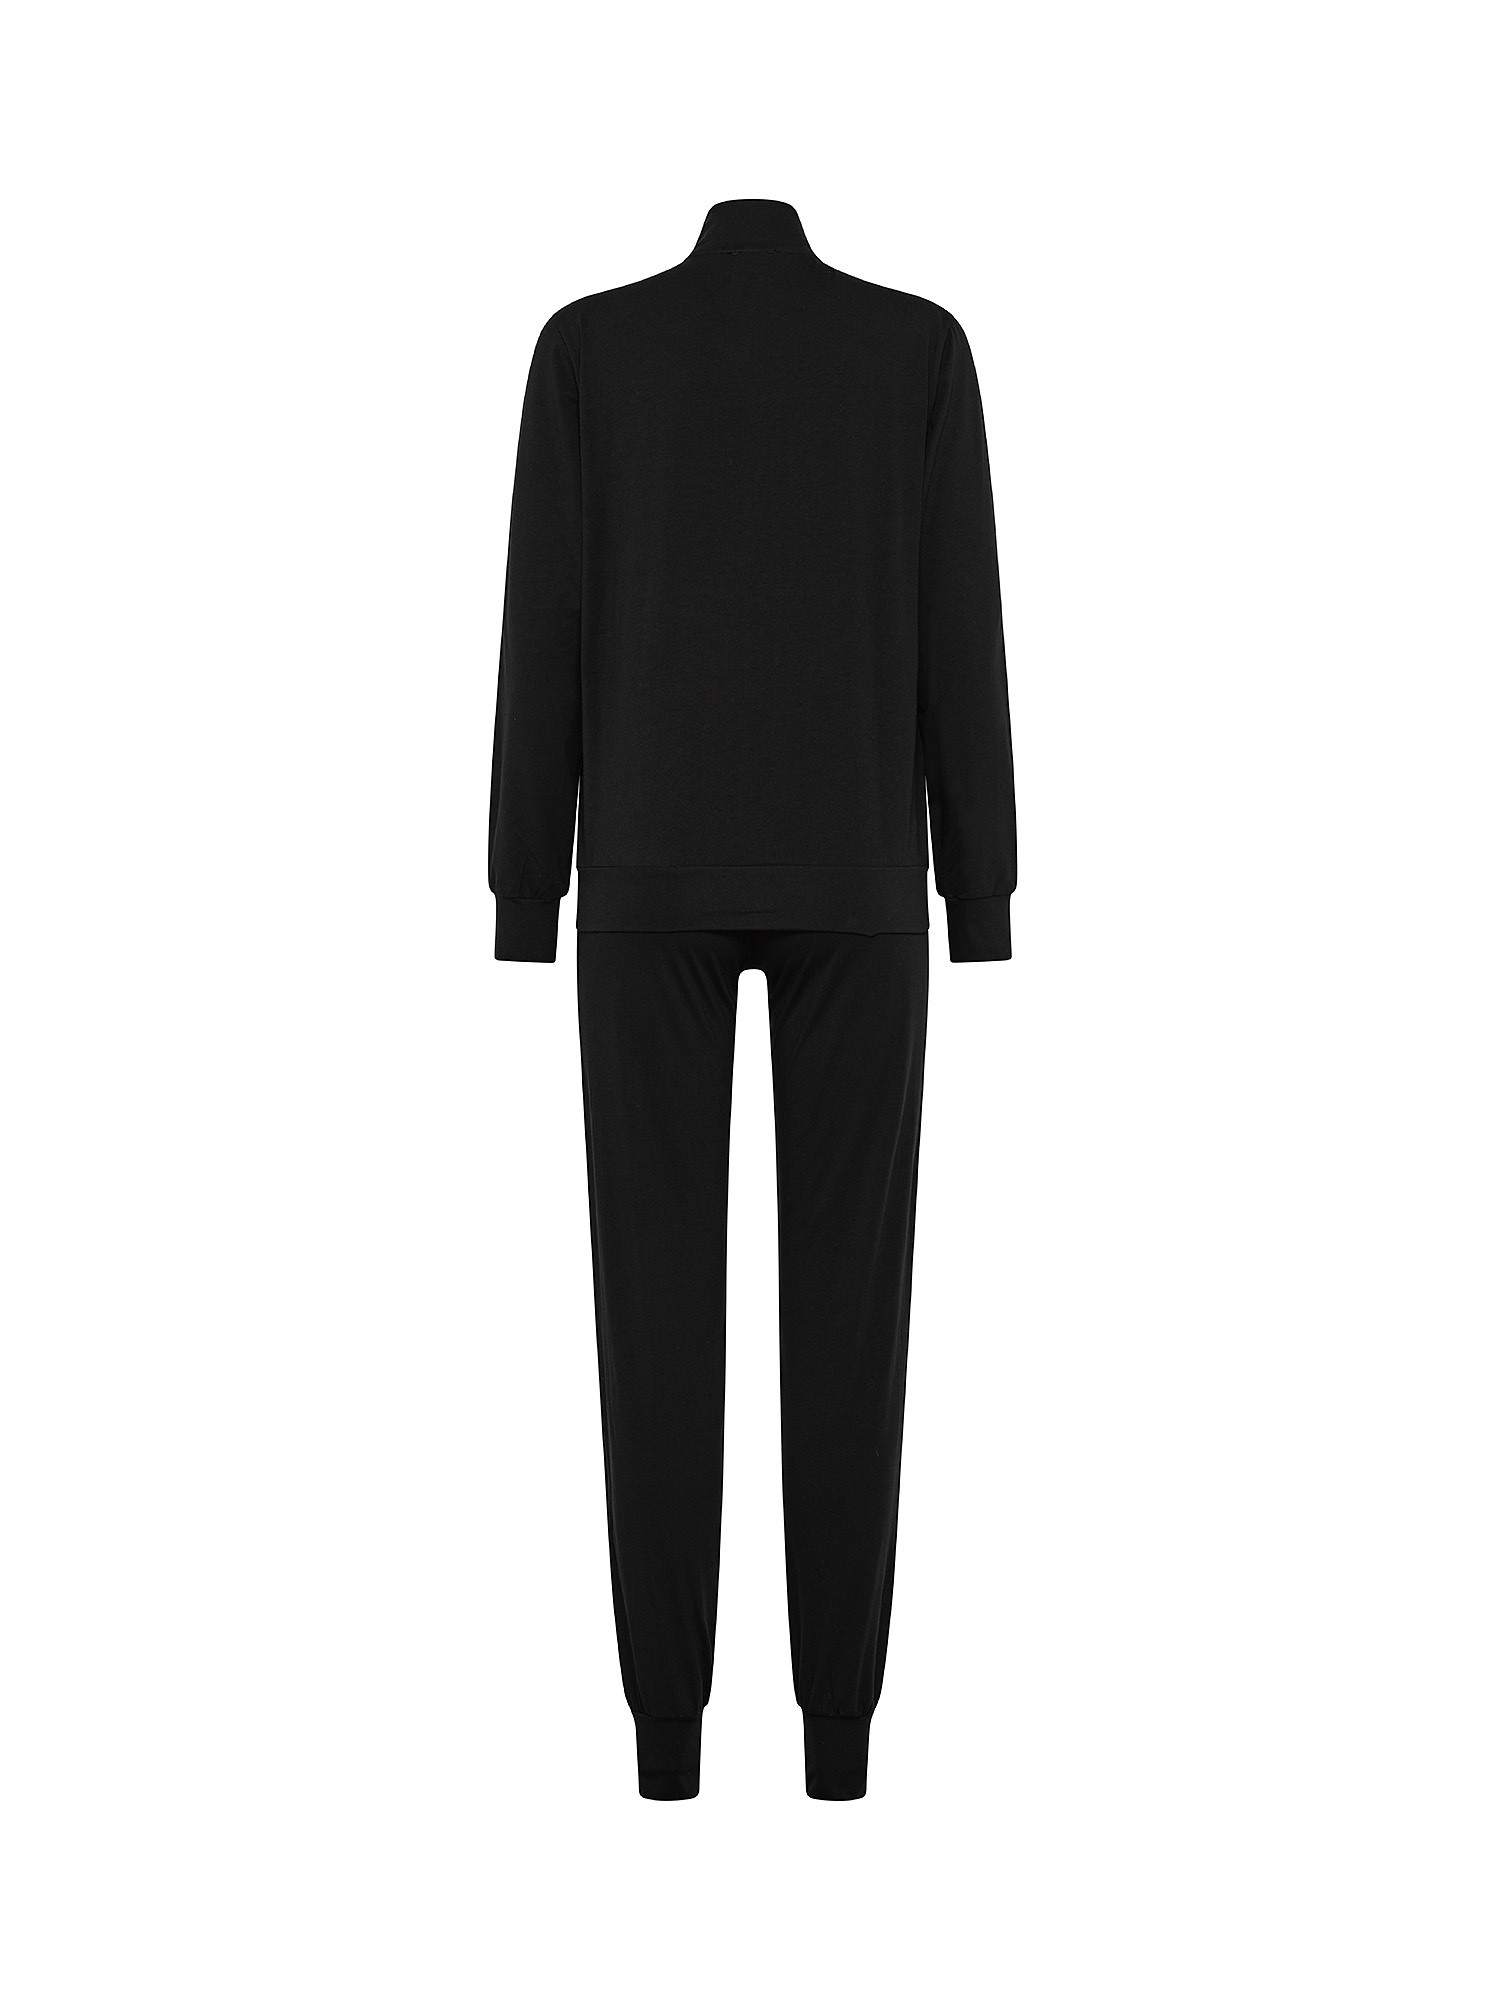 Loungewear set with full-zip sweatshirt, Black, large image number 1